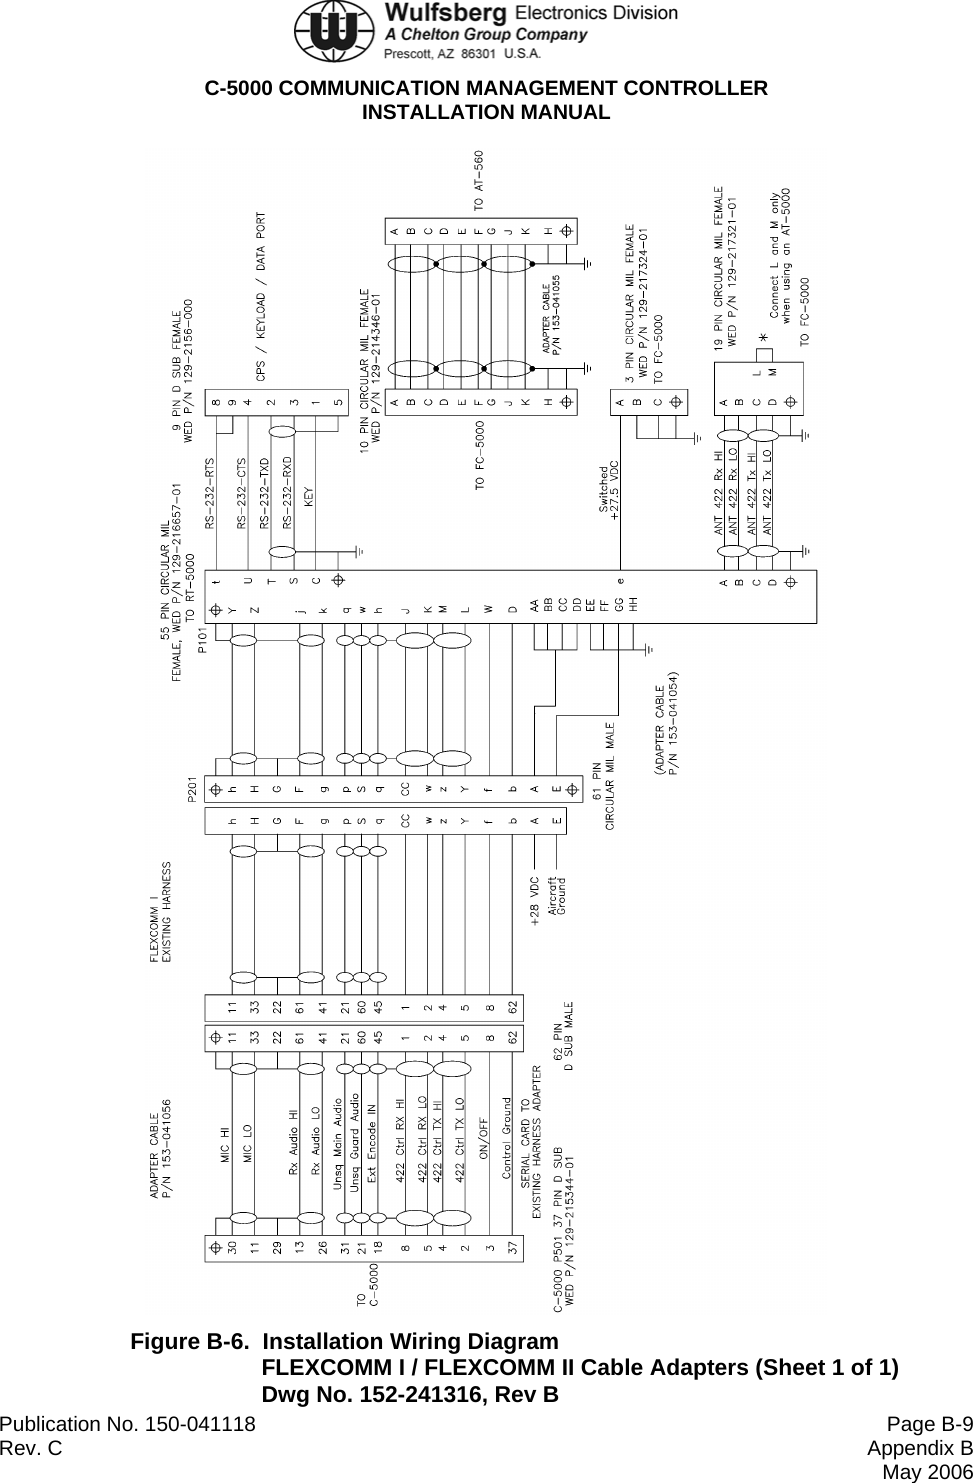  C-5000 COMMUNICATION MANAGEMENT CONTROLLER INSTALLATION MANUAL  Publication No. 150-041118  Page B-9 Rev. C  Appendix B May 2006  Figure B-6.  Installation Wiring Diagram FLEXCOMM I / FLEXCOMM II Cable Adapters (Sheet 1 of 1) Dwg No. 152-241316, Rev B 